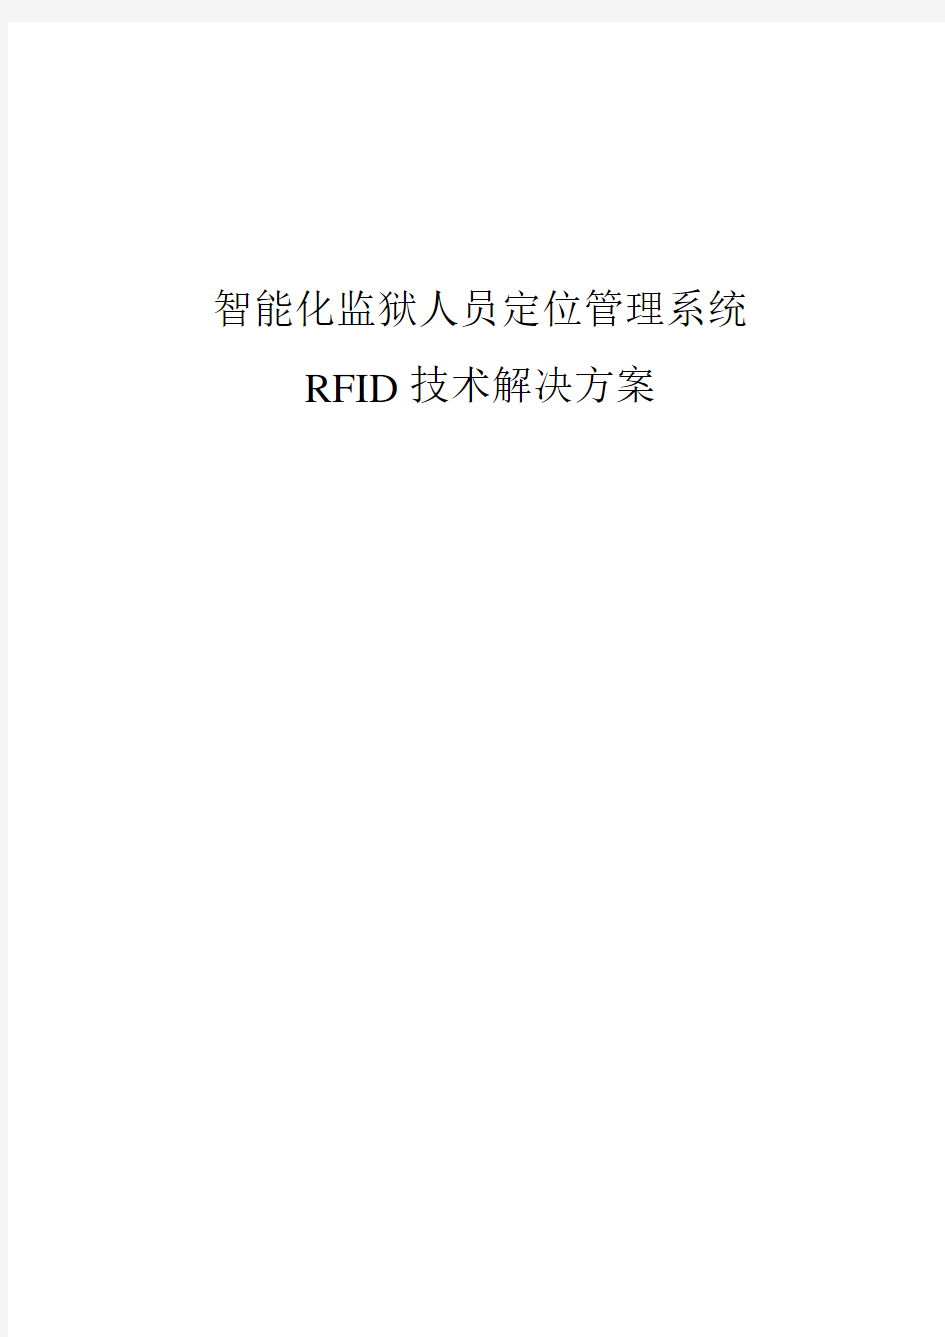 RFID智能化监狱人员定位管理系统方案